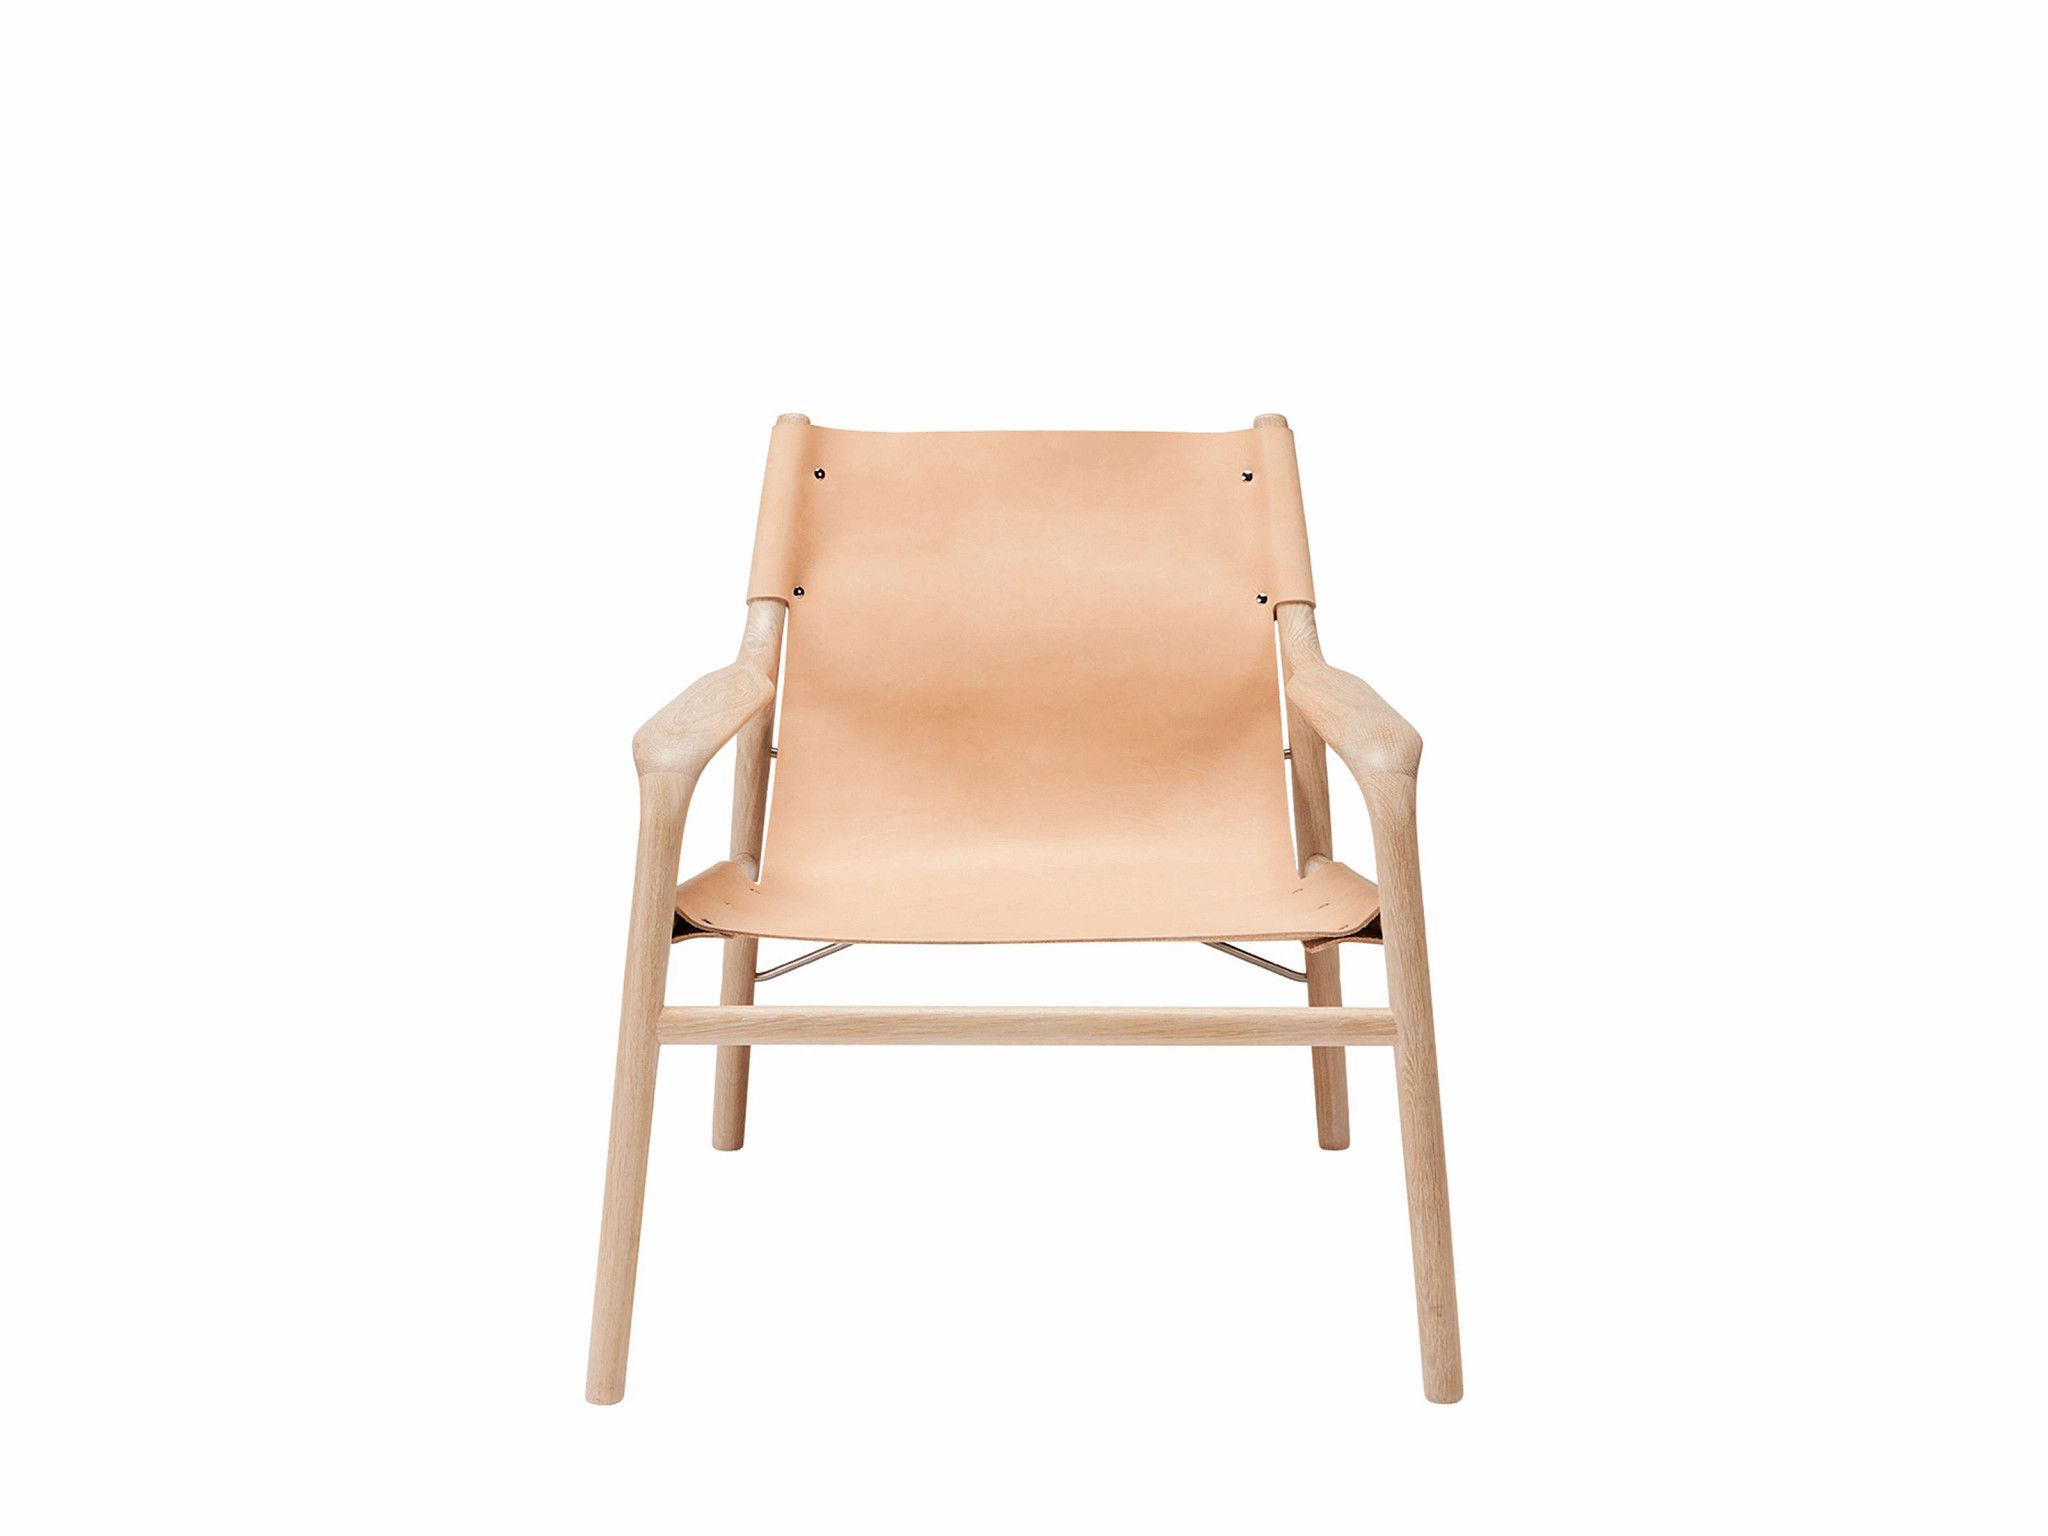 Fisker ål zone Soul Lounge Chair by Bolia | Steelcase